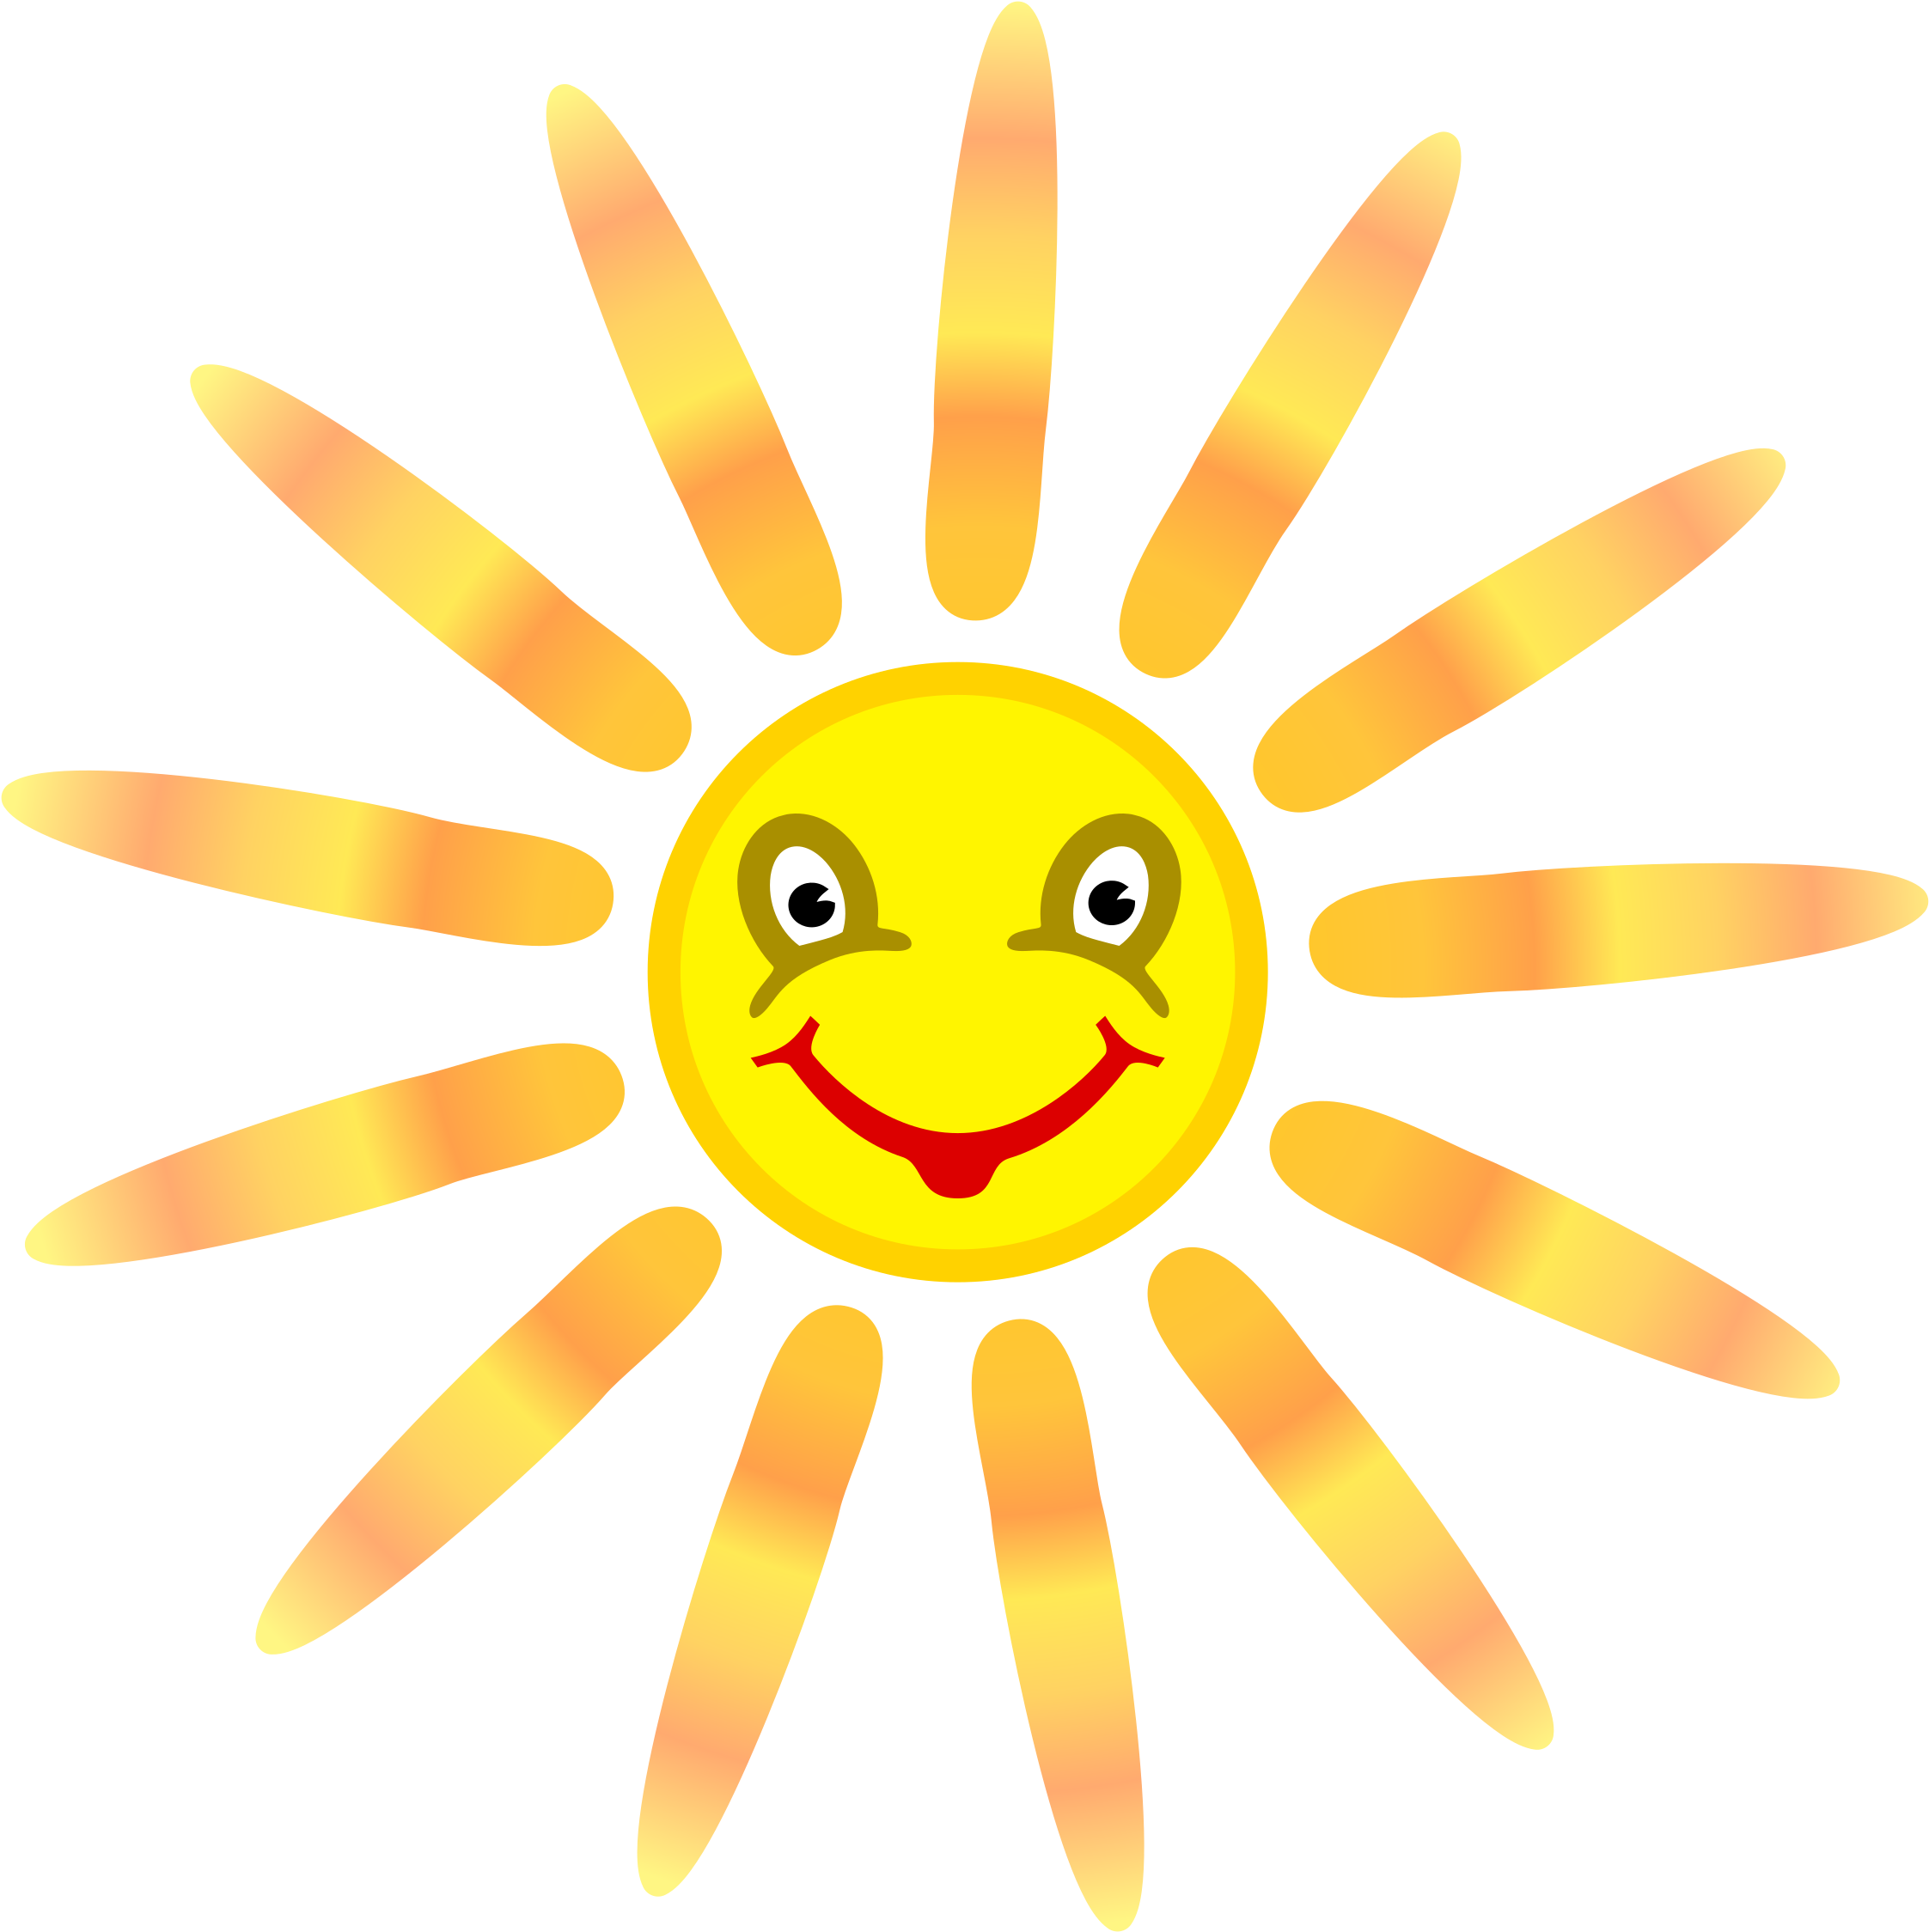 Солнце изображение рисунок. Солнце рисунок. Солнышко рисунок. Солнце для дошкольников. Детские рисунки солнце.